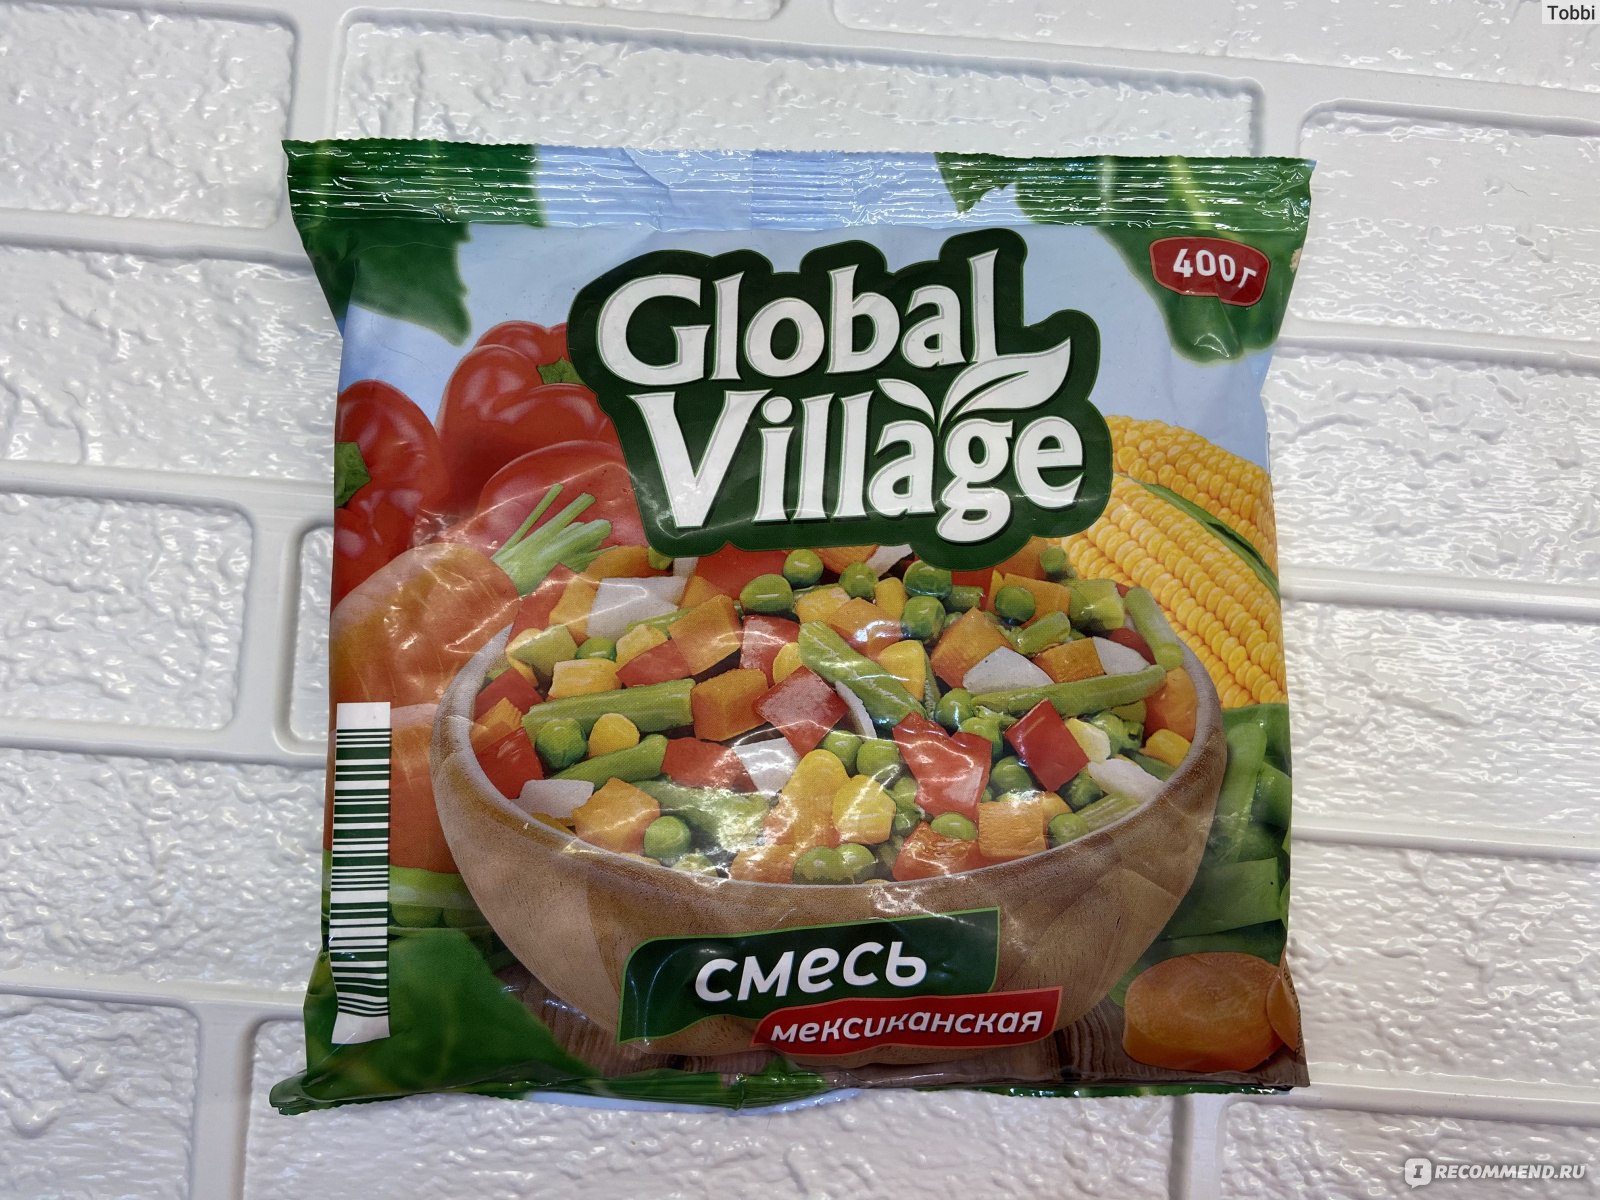 Global village овощи. Мексиканская смесь овощей Global Village. Мексиканская смесь Глобал Виладж. Смесь овощная Global Village Мексиканская 400г. Смесь Мексиканская, Global Village, 400 г.